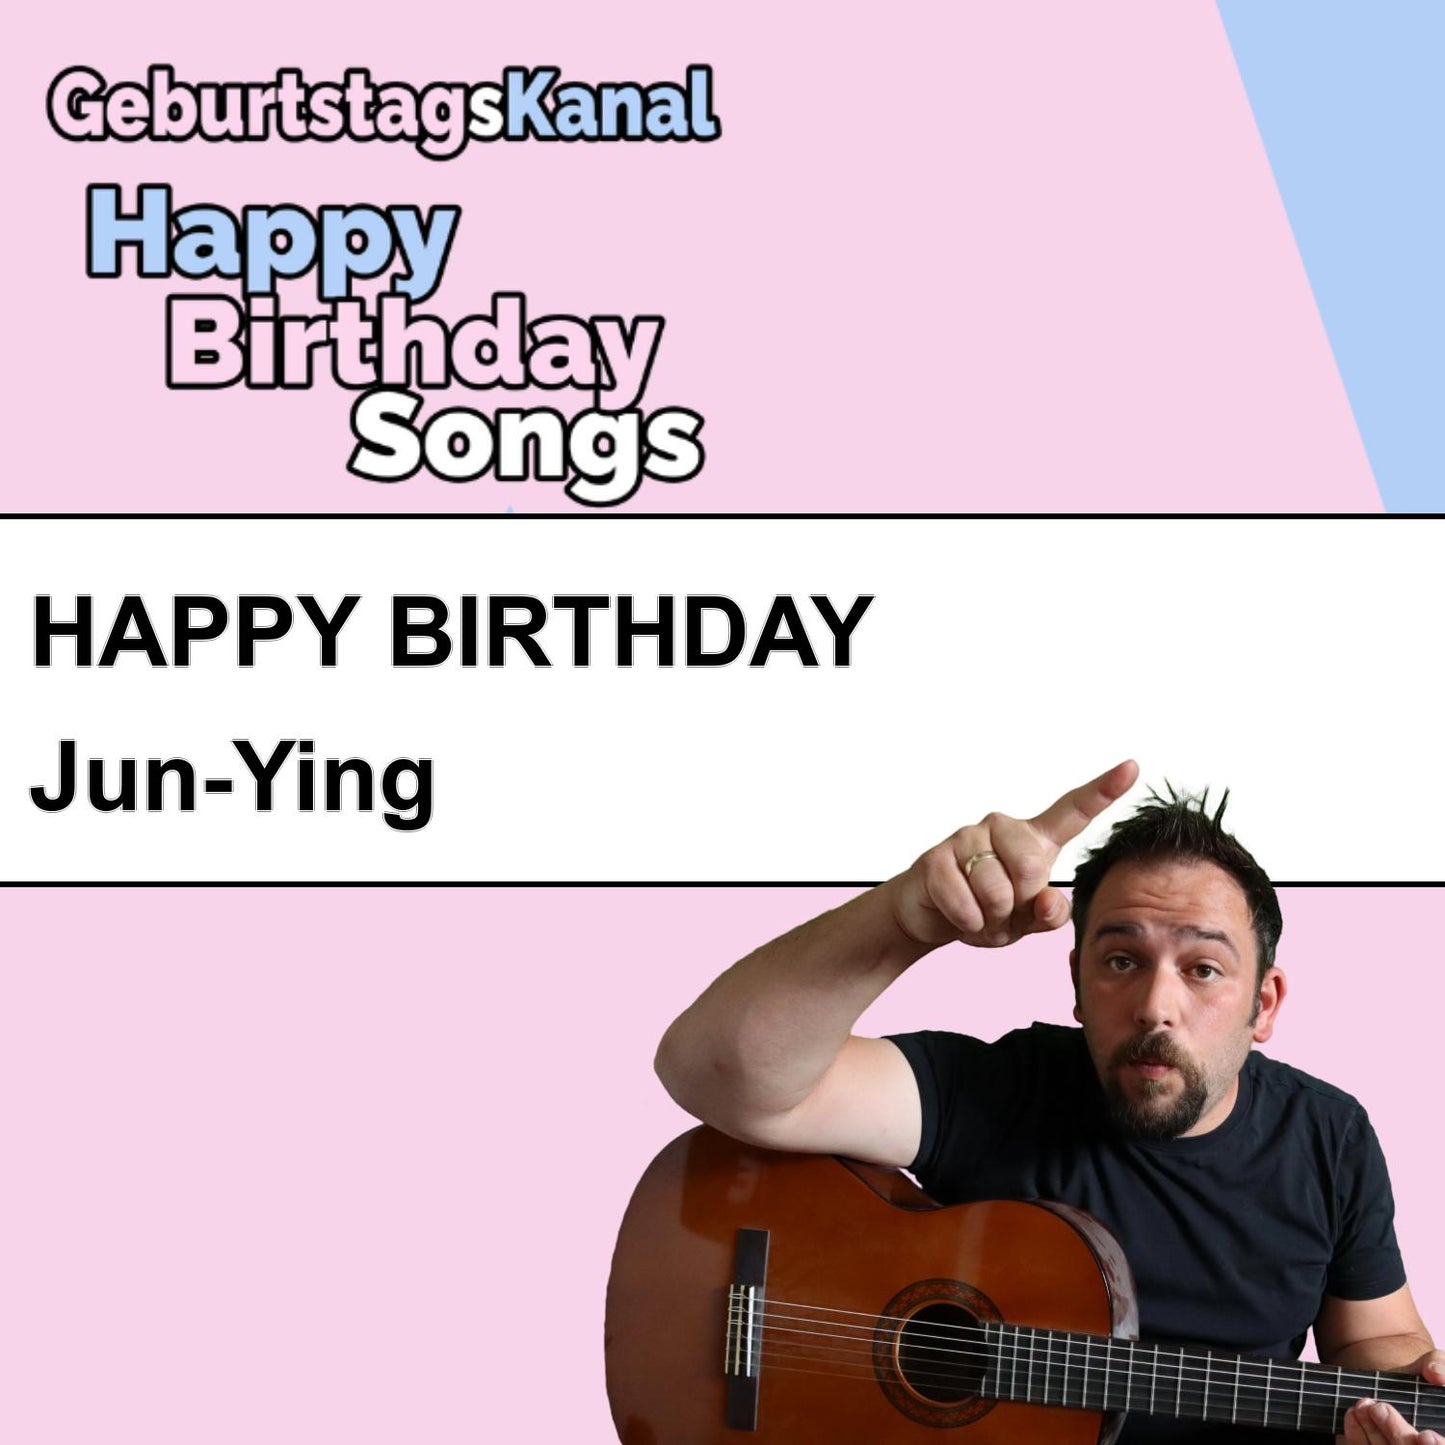 Produktbild Happy Birthday to you Jun-Ying mit Wunschgrußbotschaft